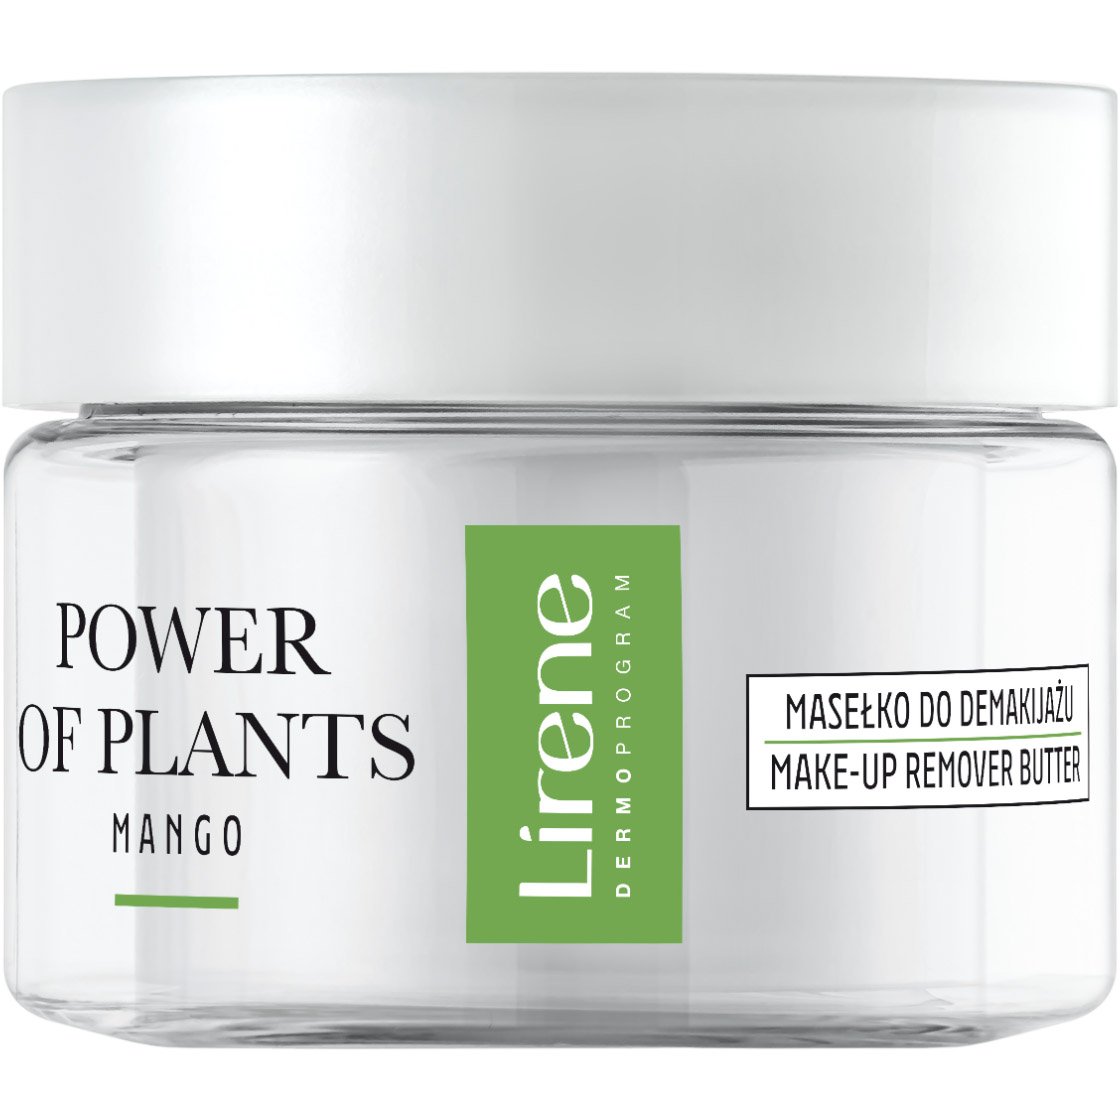 Масло для зняття макіяжу Lirene Power of Plants Make-up Remover Butter Mango 45 мл - фото 1